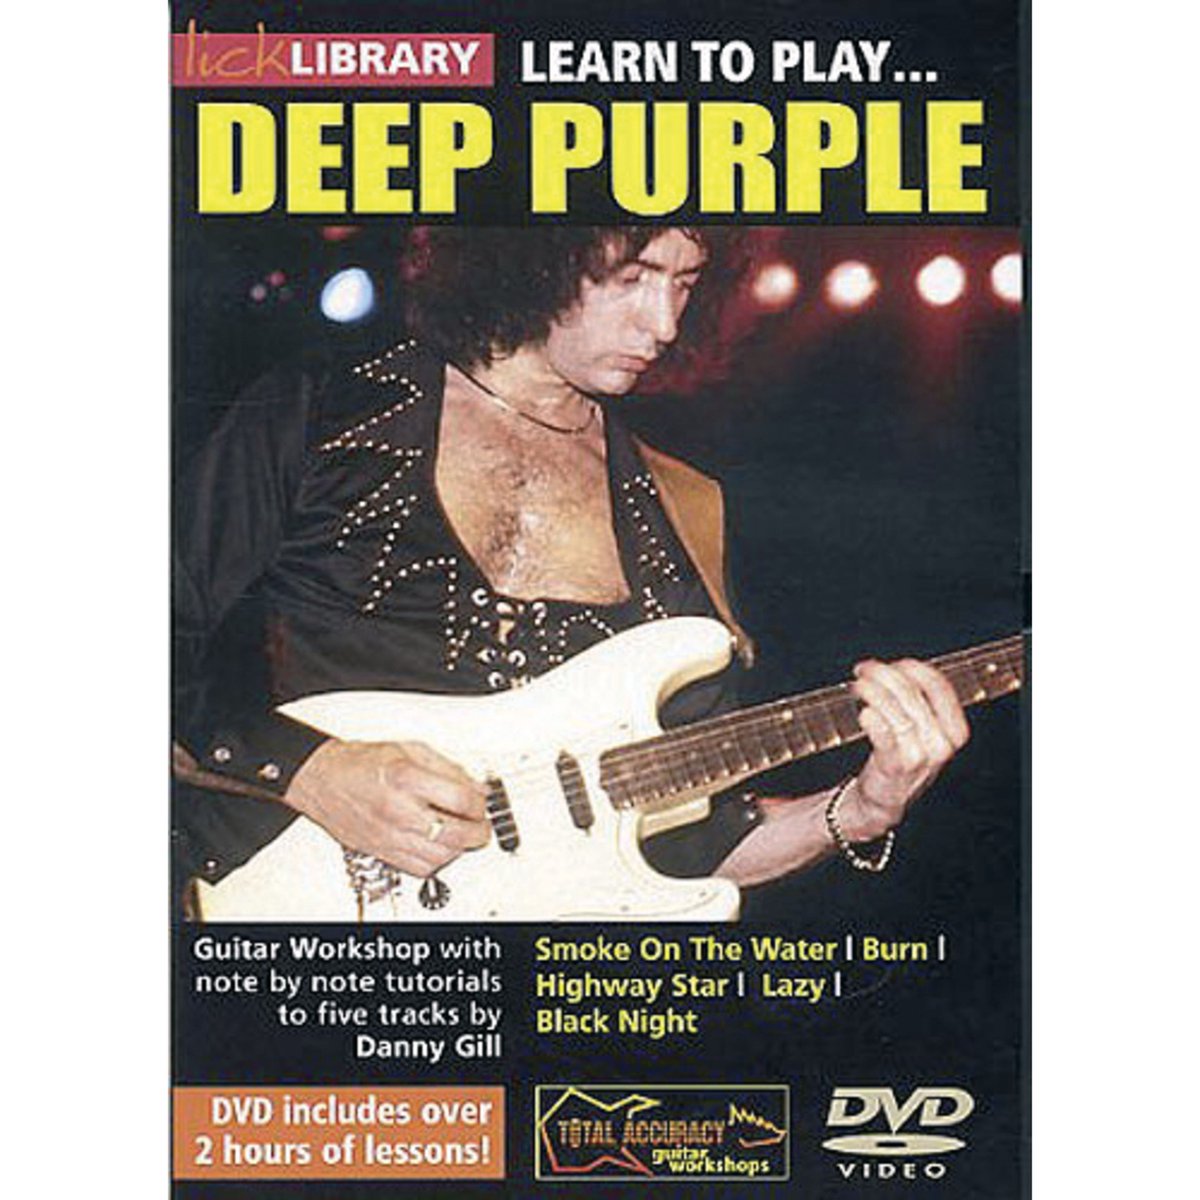 Roadrock International Lick Library - Deep Purple Learn to play (gitaar), DVD - DVD / CD / Multimedia: C - D